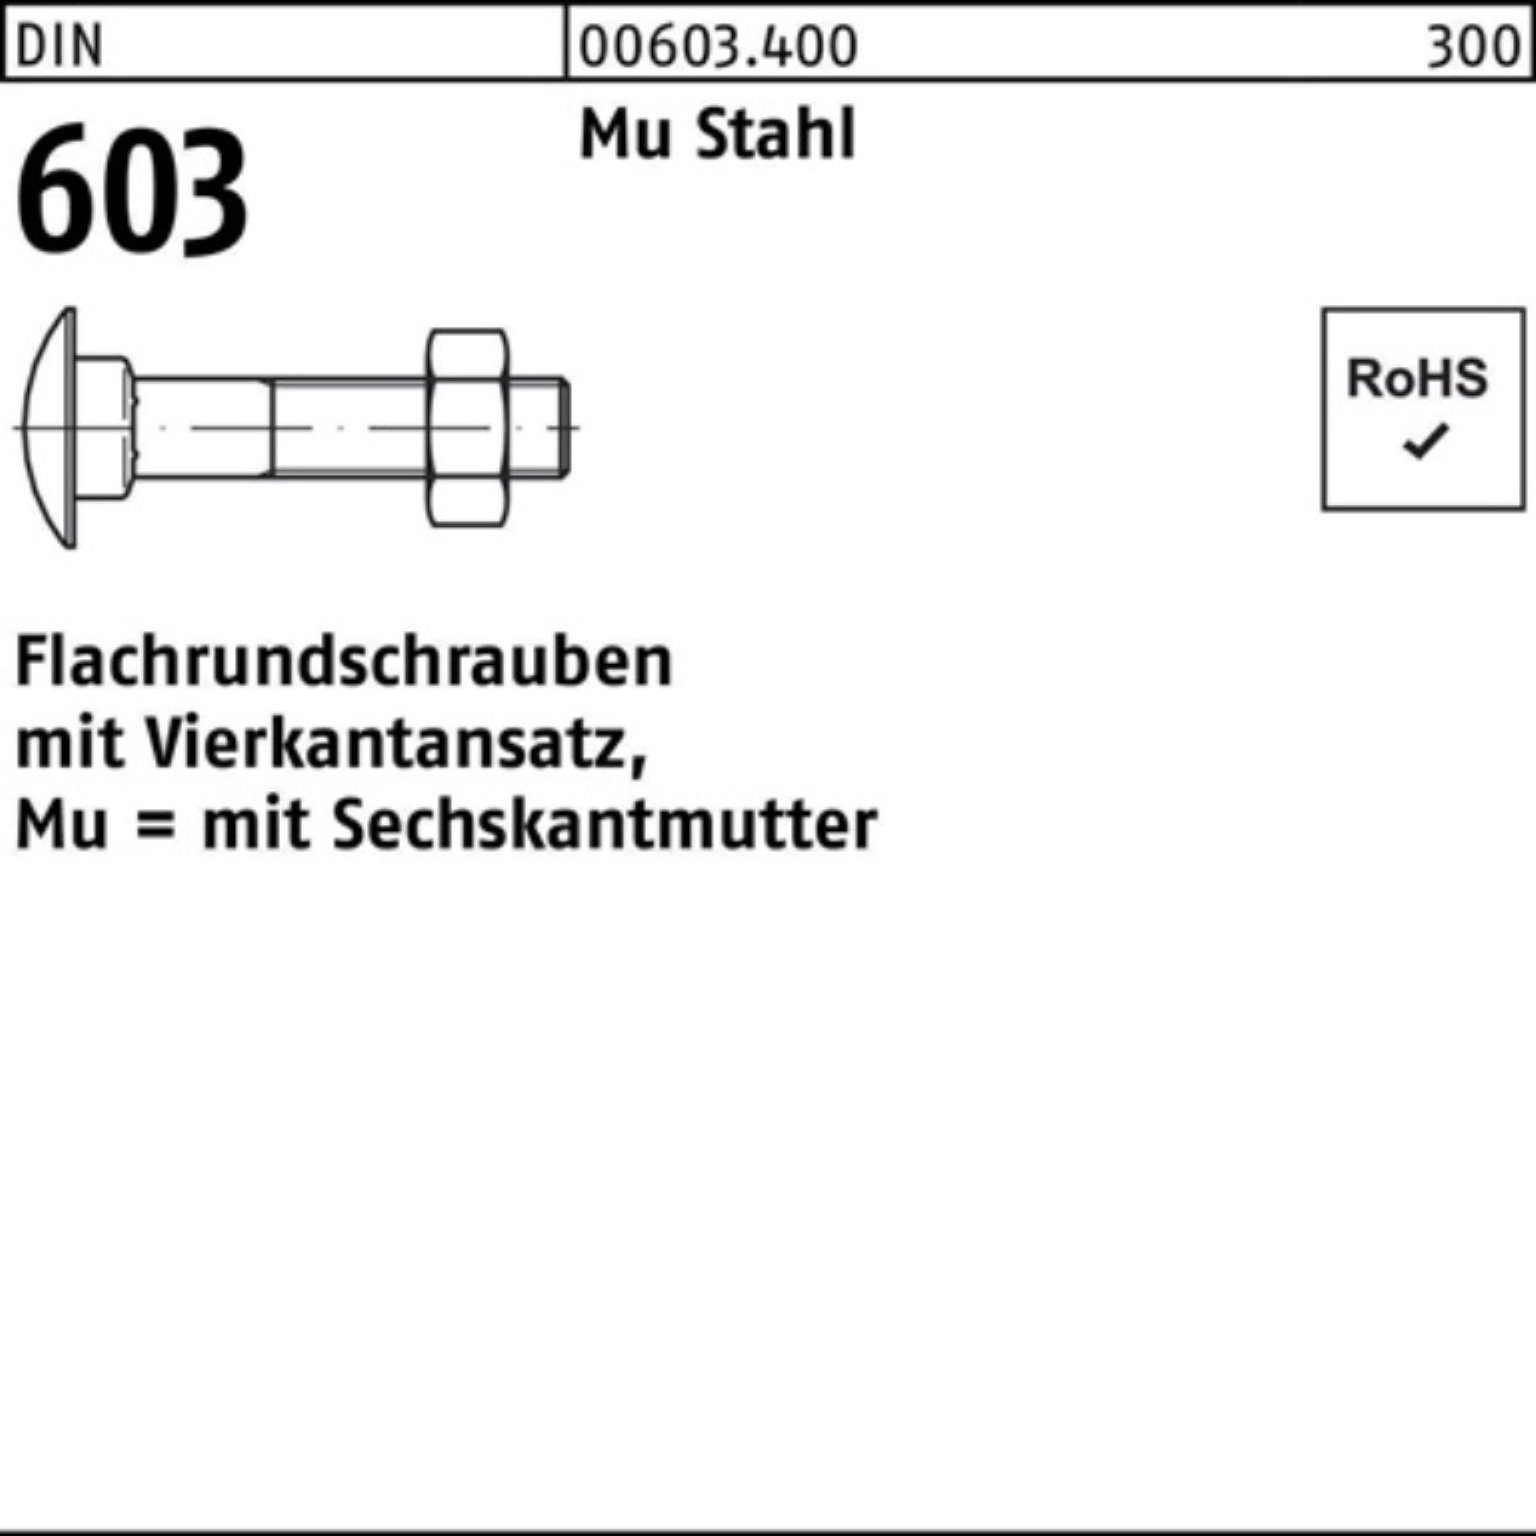 Flachrundschraube Vierkantansatz/6-ktmutter 100er 603 Reyher DIN Pack Schraube M8x180